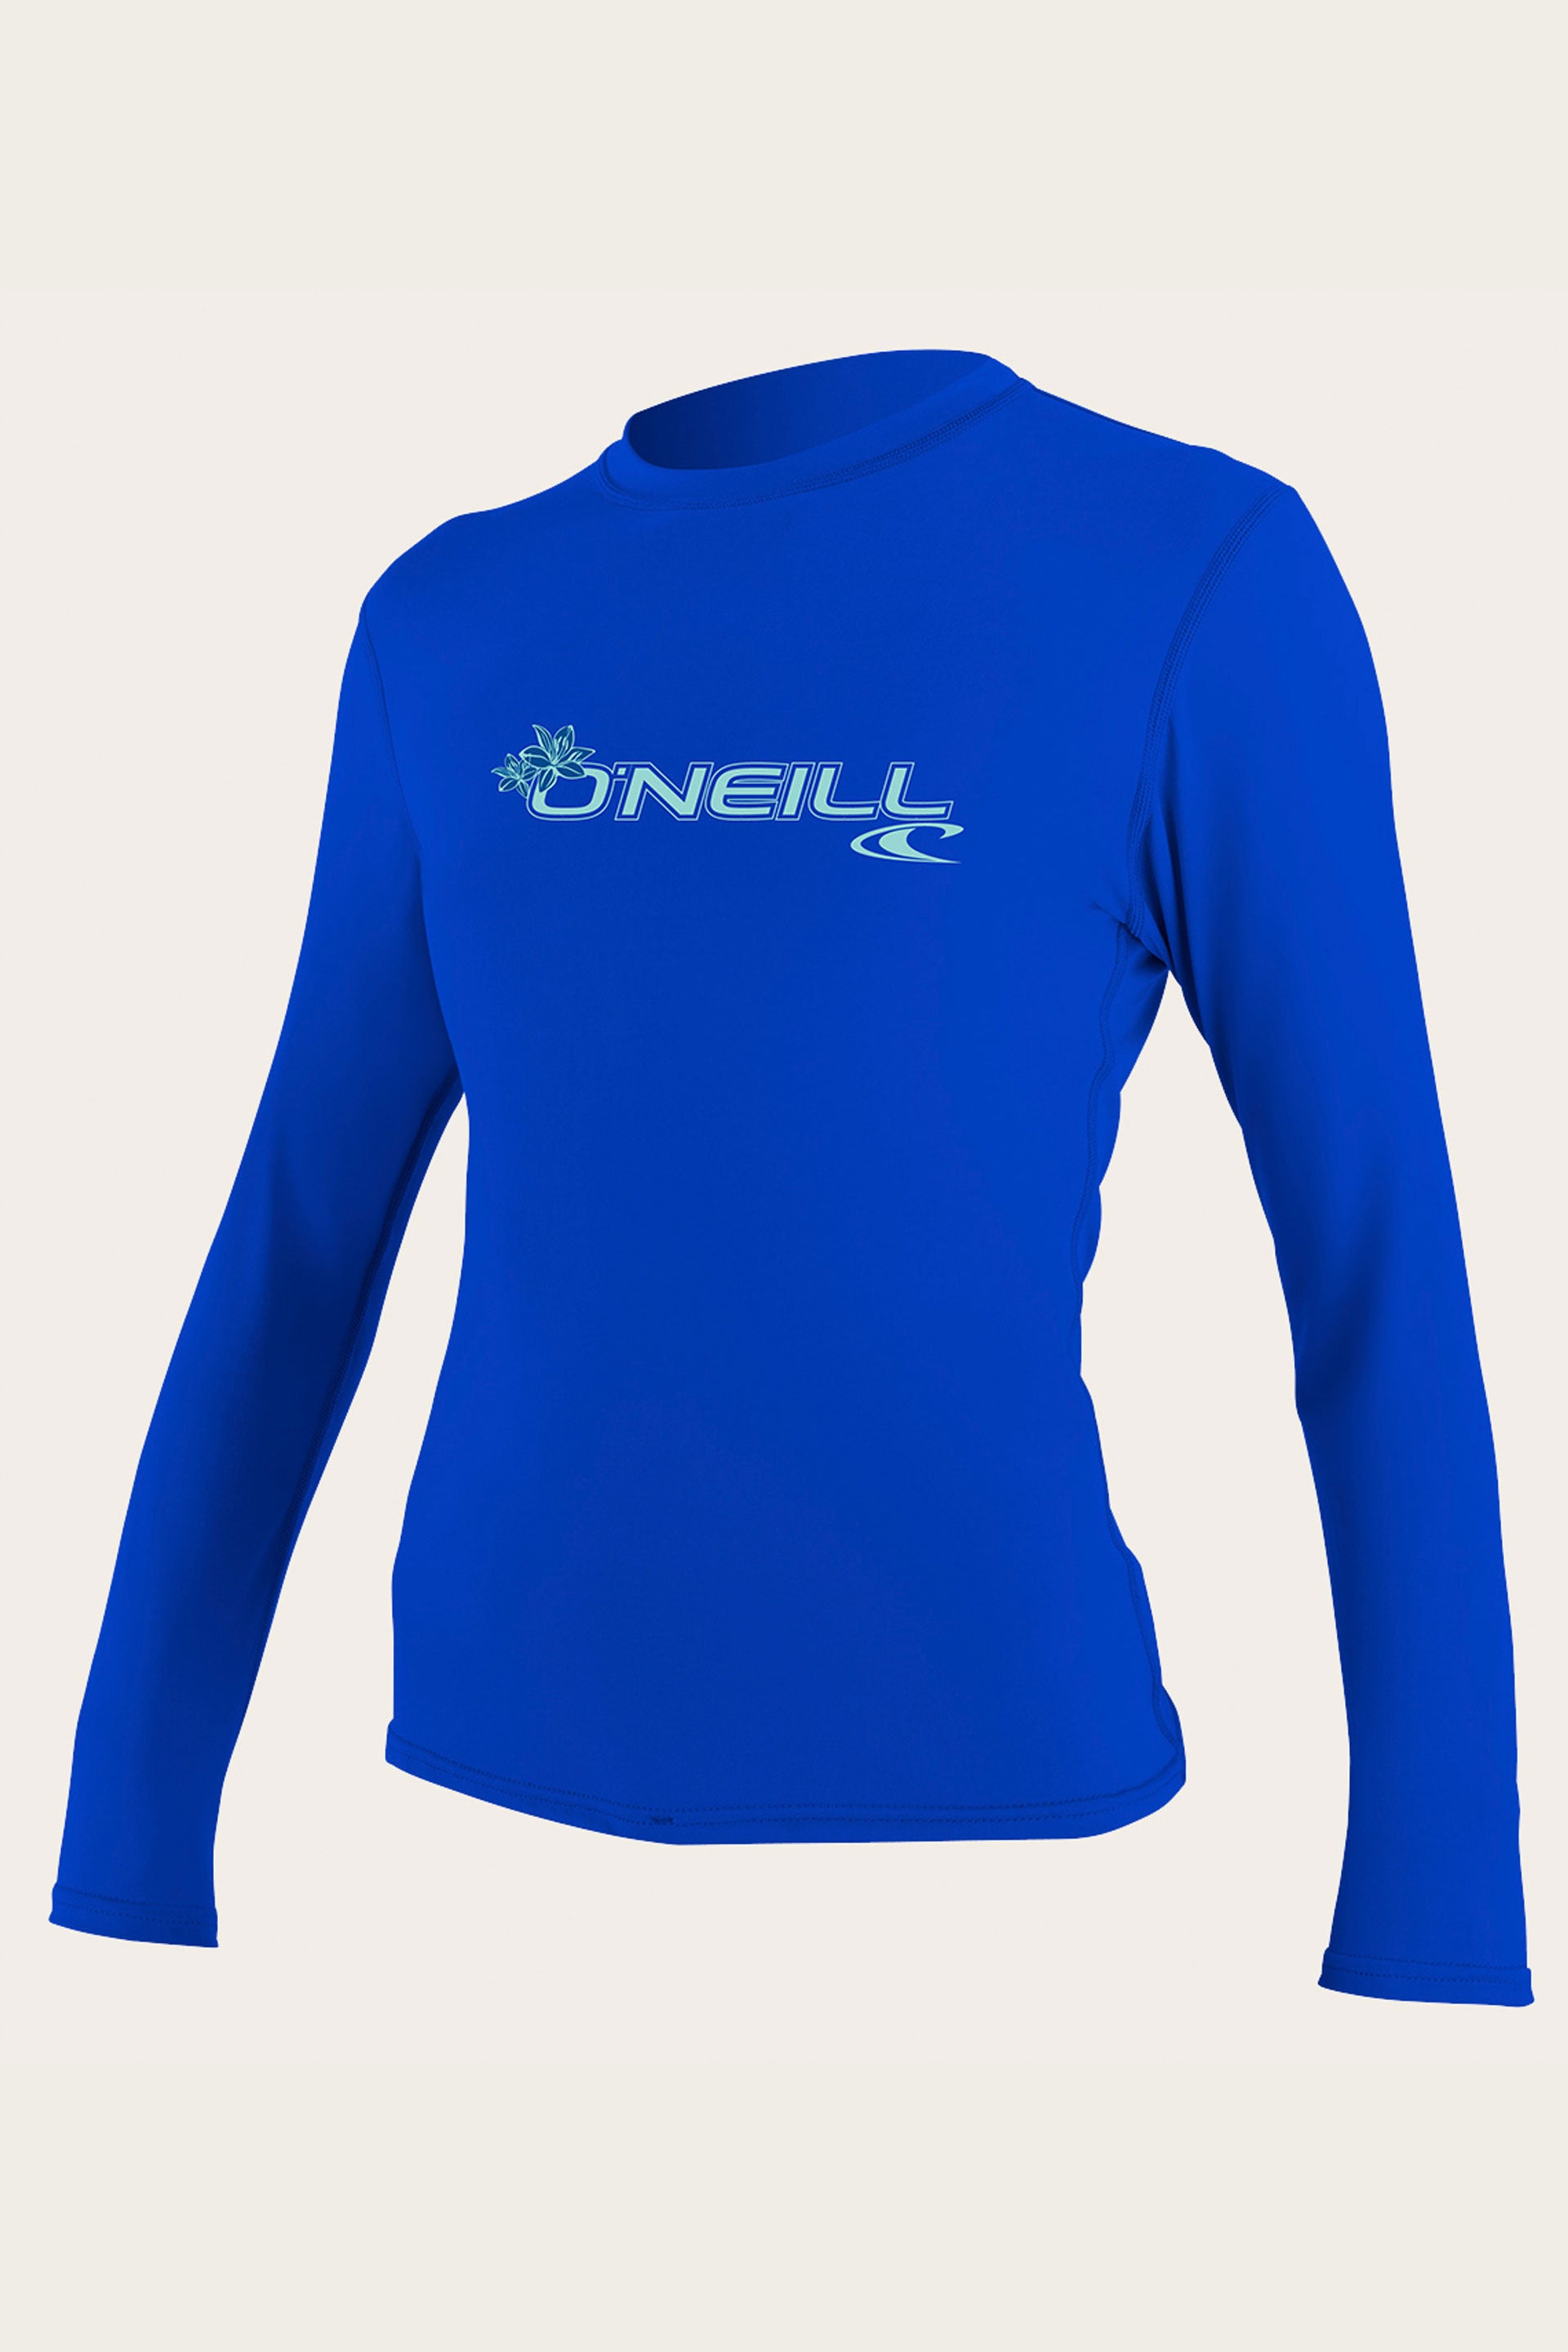 O'Neill Women's Basic Skins Long Sleeve Crew Rashguard at